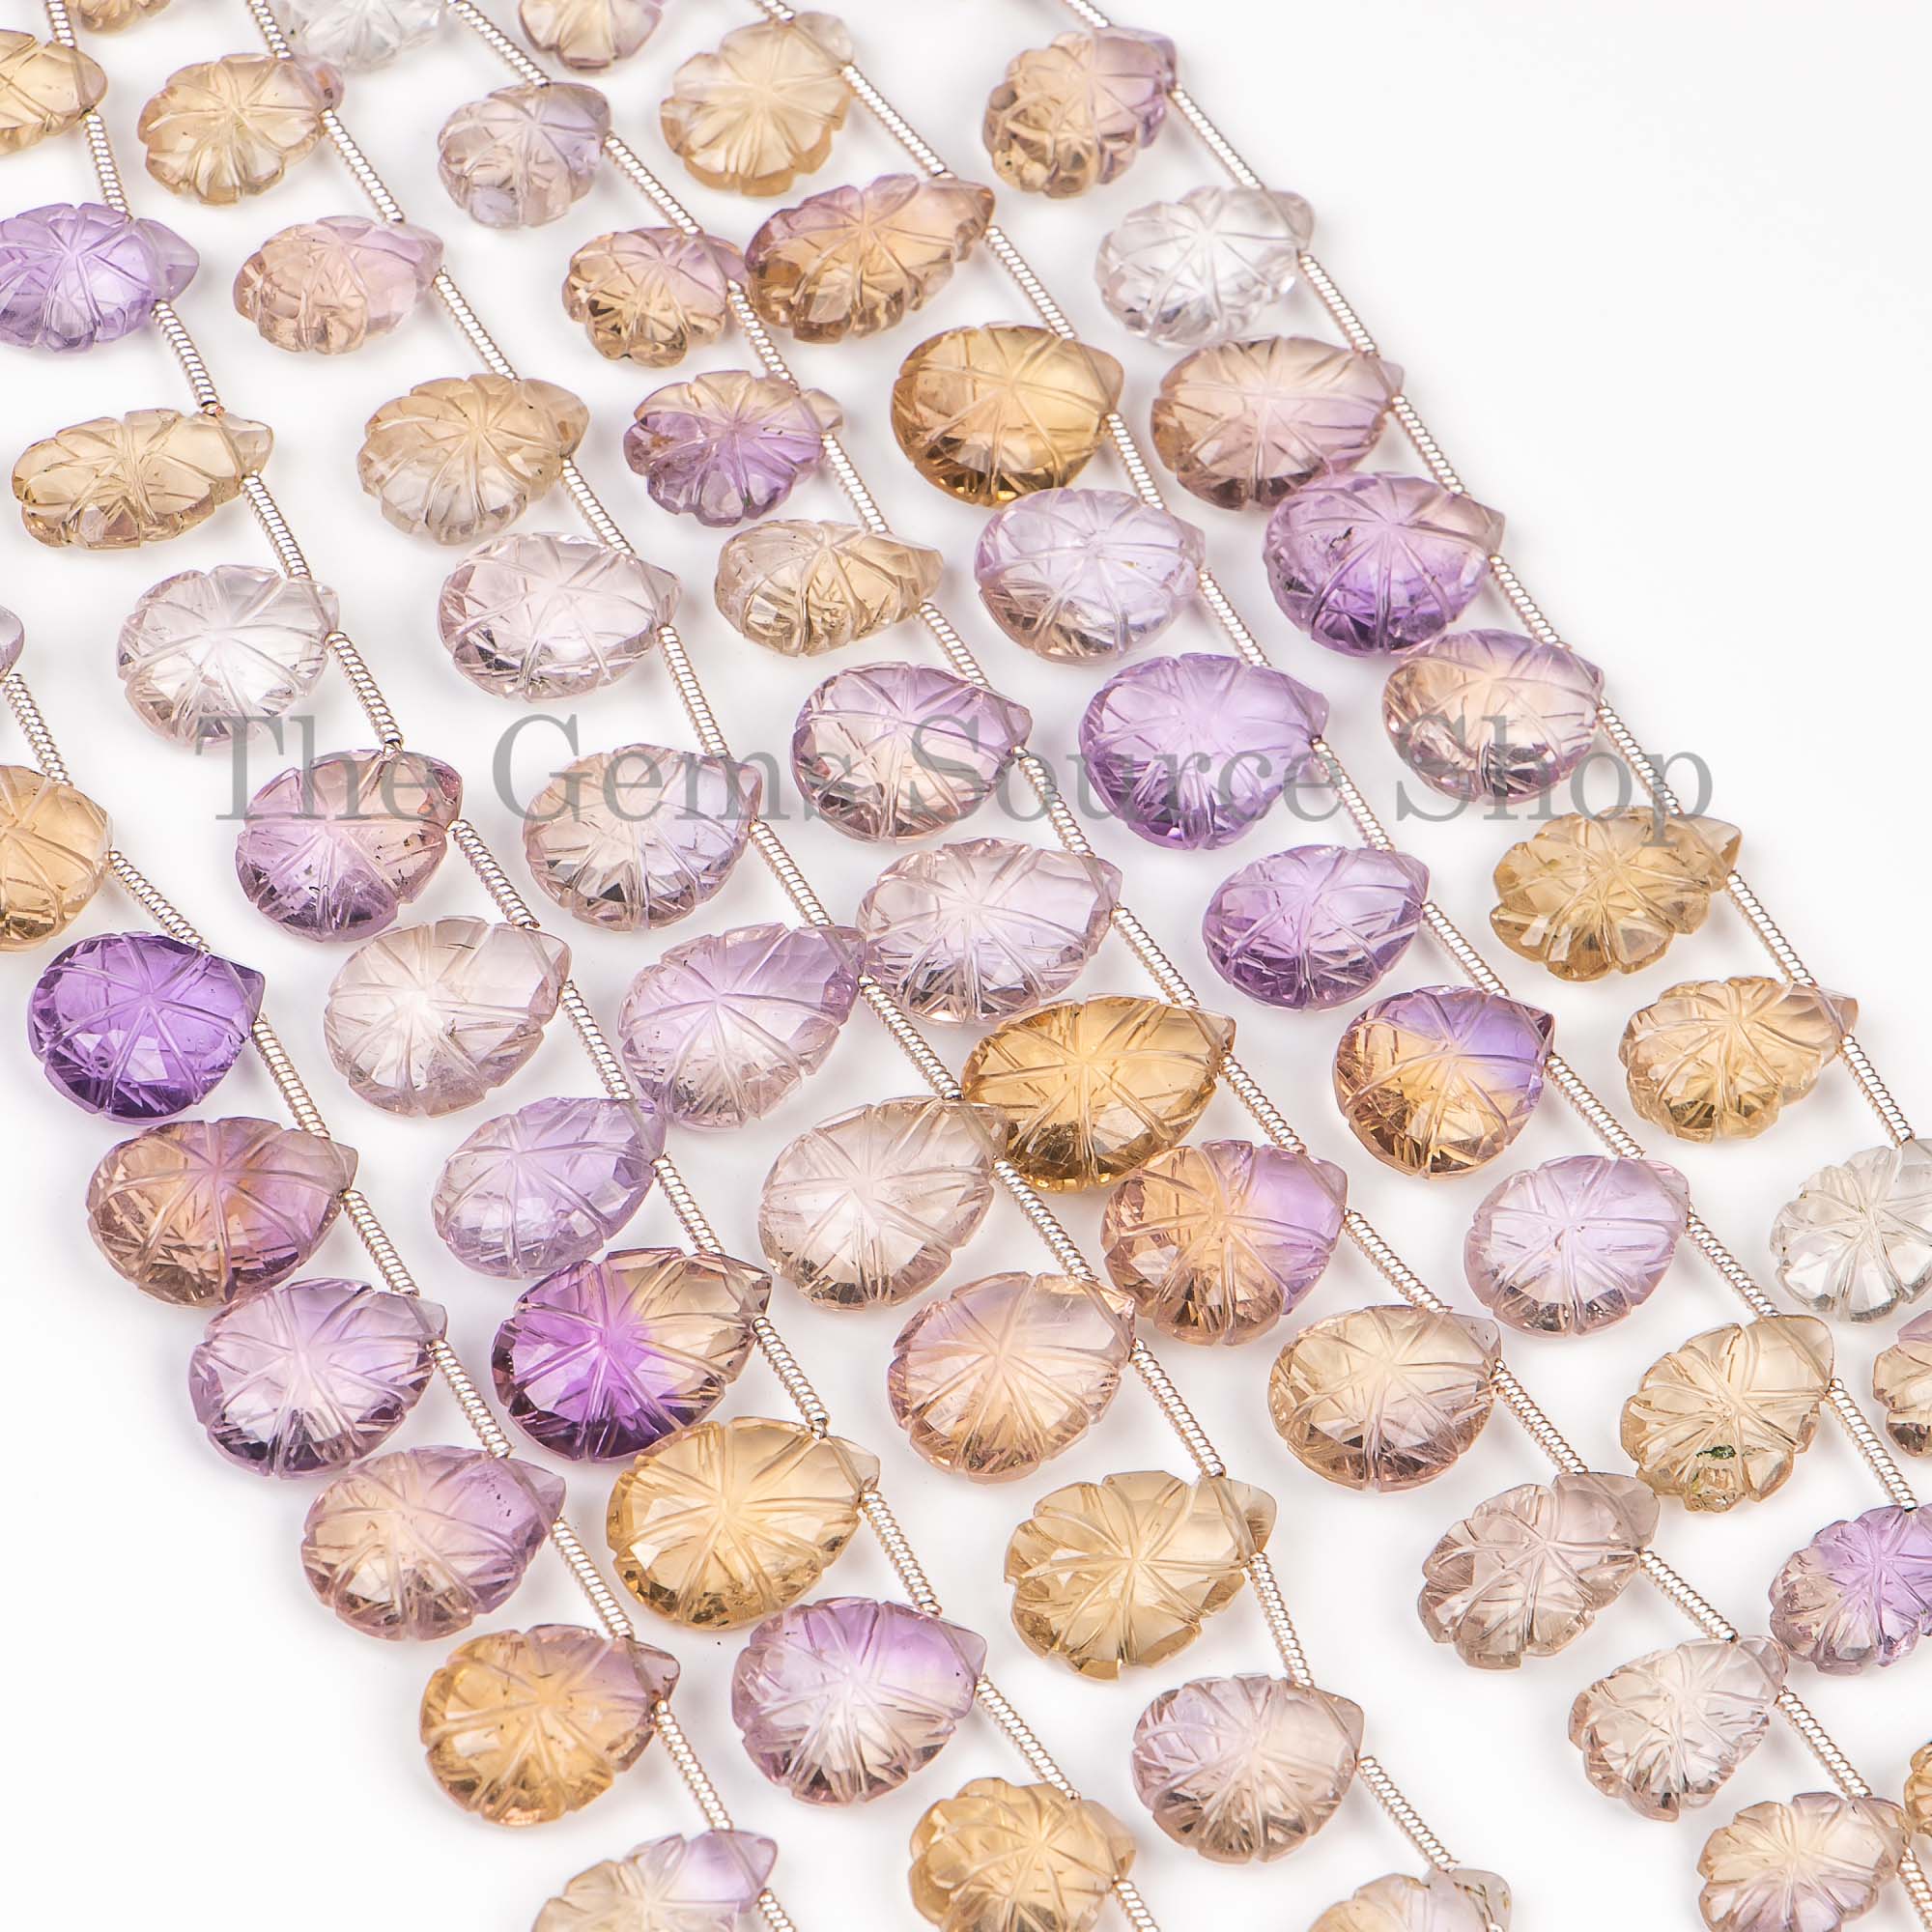 Natural Ametrine Pear Shape Flower Carving Beads, Ametrine Pear Carving Beads